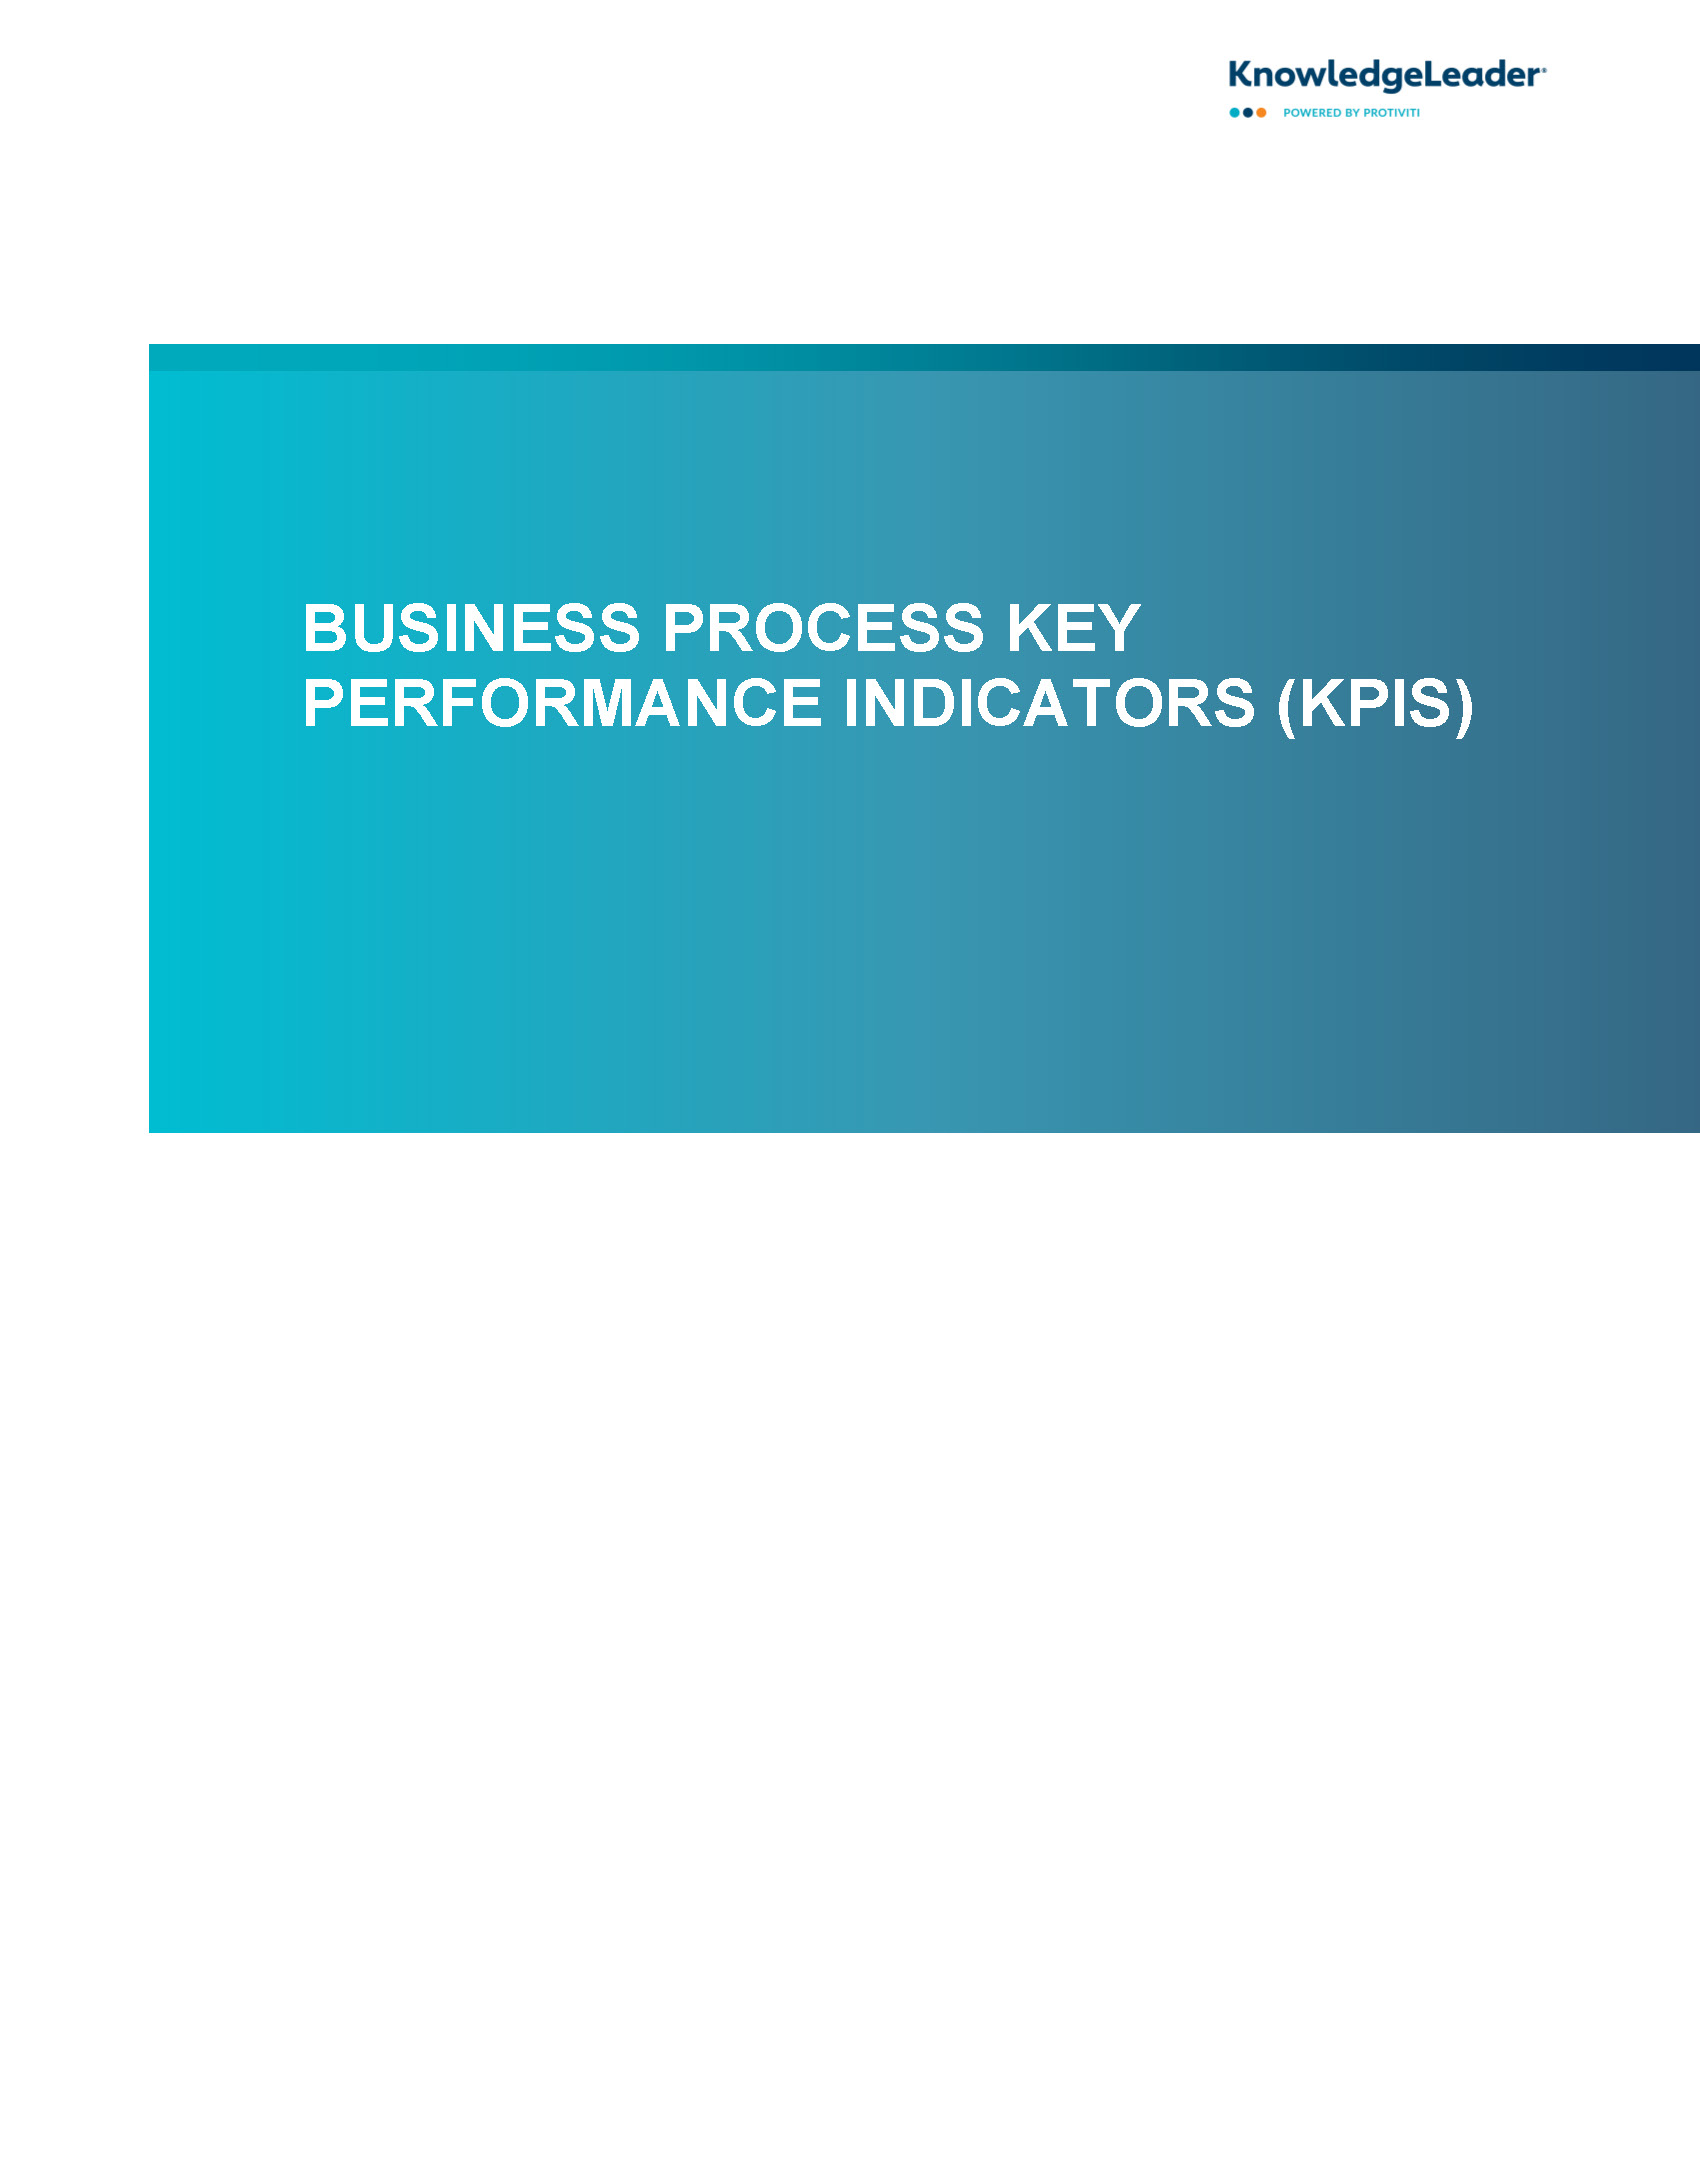 Business Process Key Performance Indicators (KPIs)